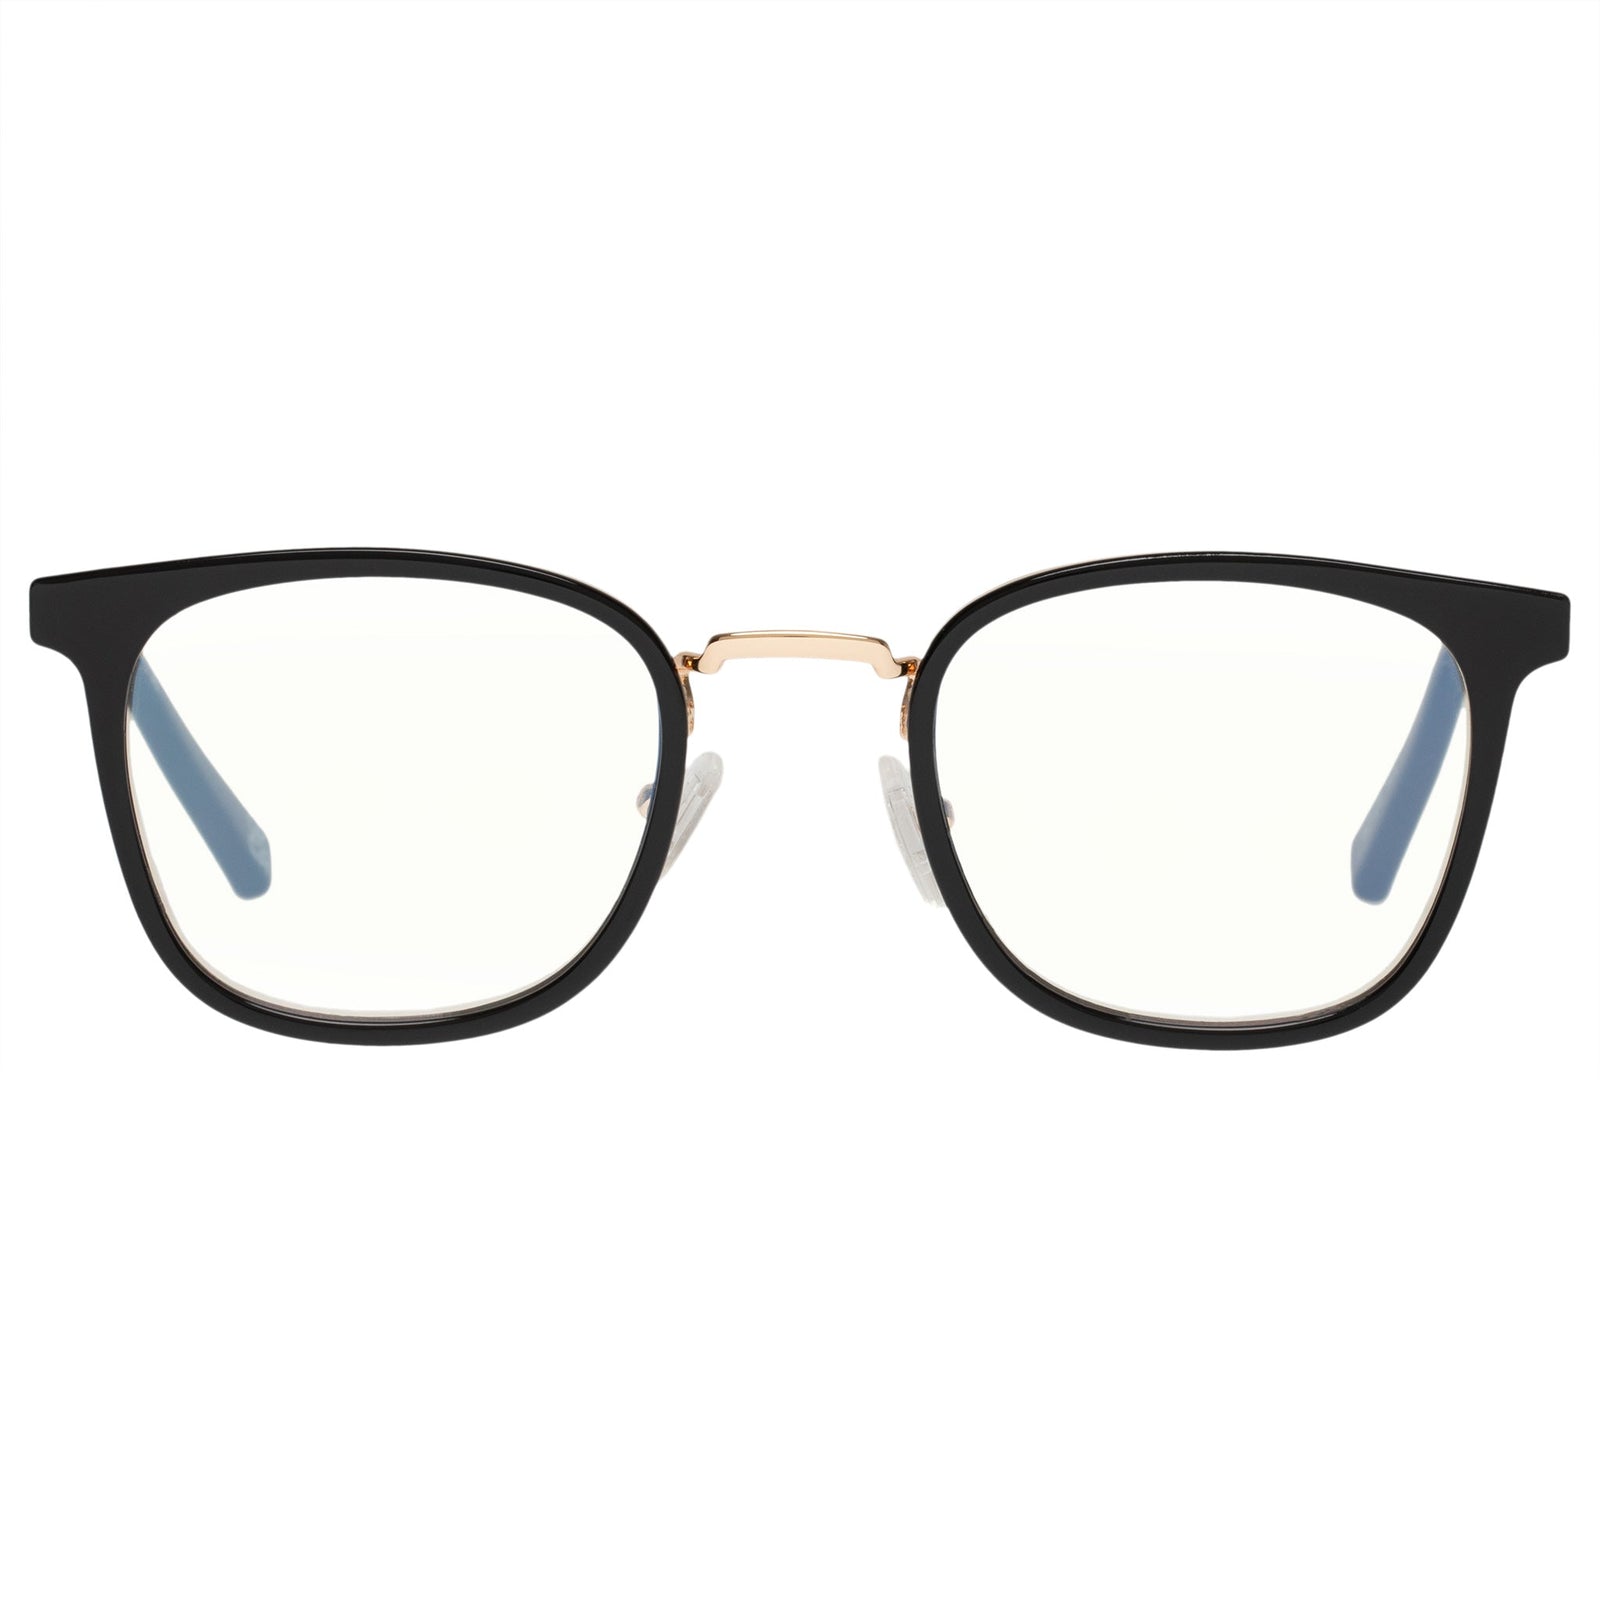 2 pack Sport Glasses - Clear - UNISEX WOC-LG – wearoverglasses